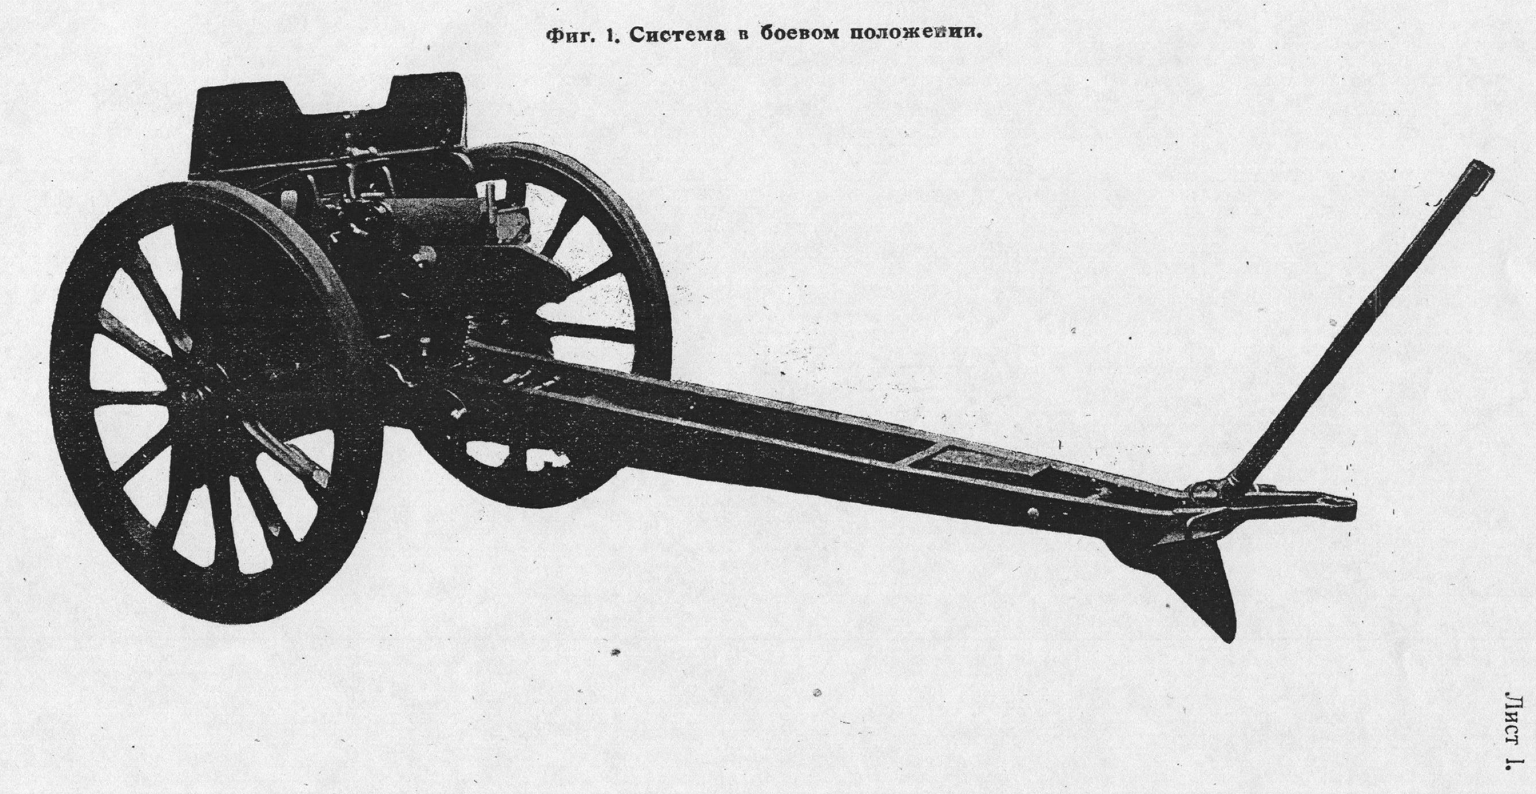 76-мм полковая пушка обр. 1927 г. Руководство службы.. 1929